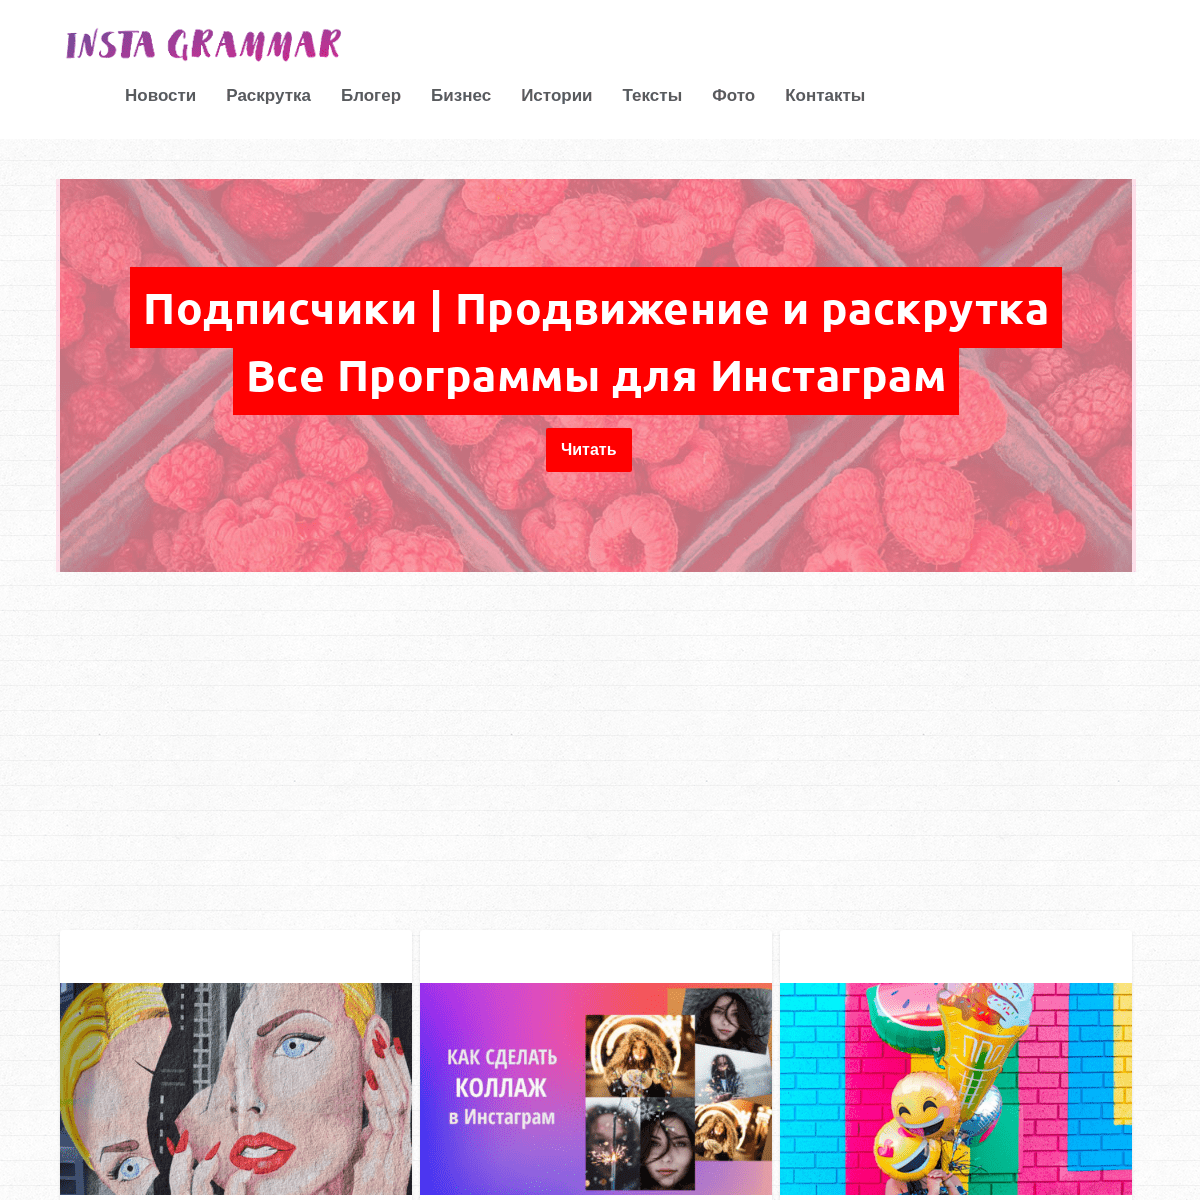 A complete backup of instagrammar.ru